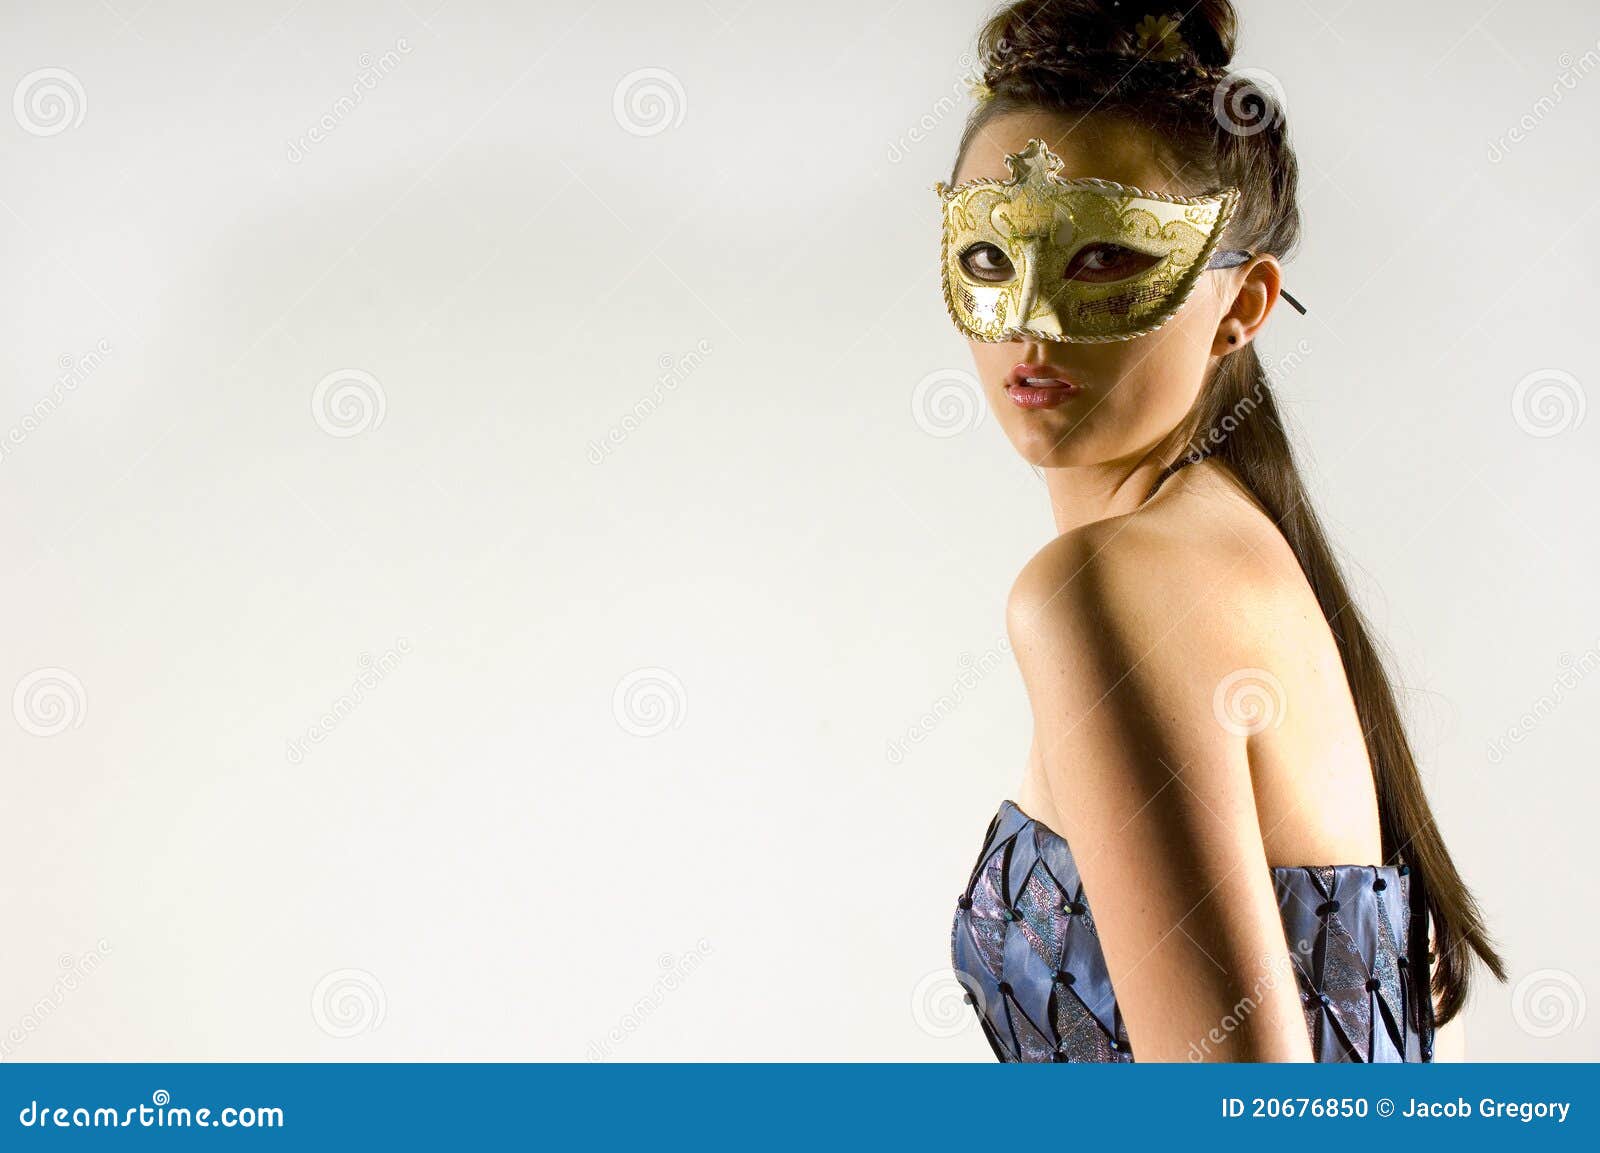 Young Teen Woman At Masquerade Ball Stock Photo - Image of celebration, eyes: 206768501300 x 953